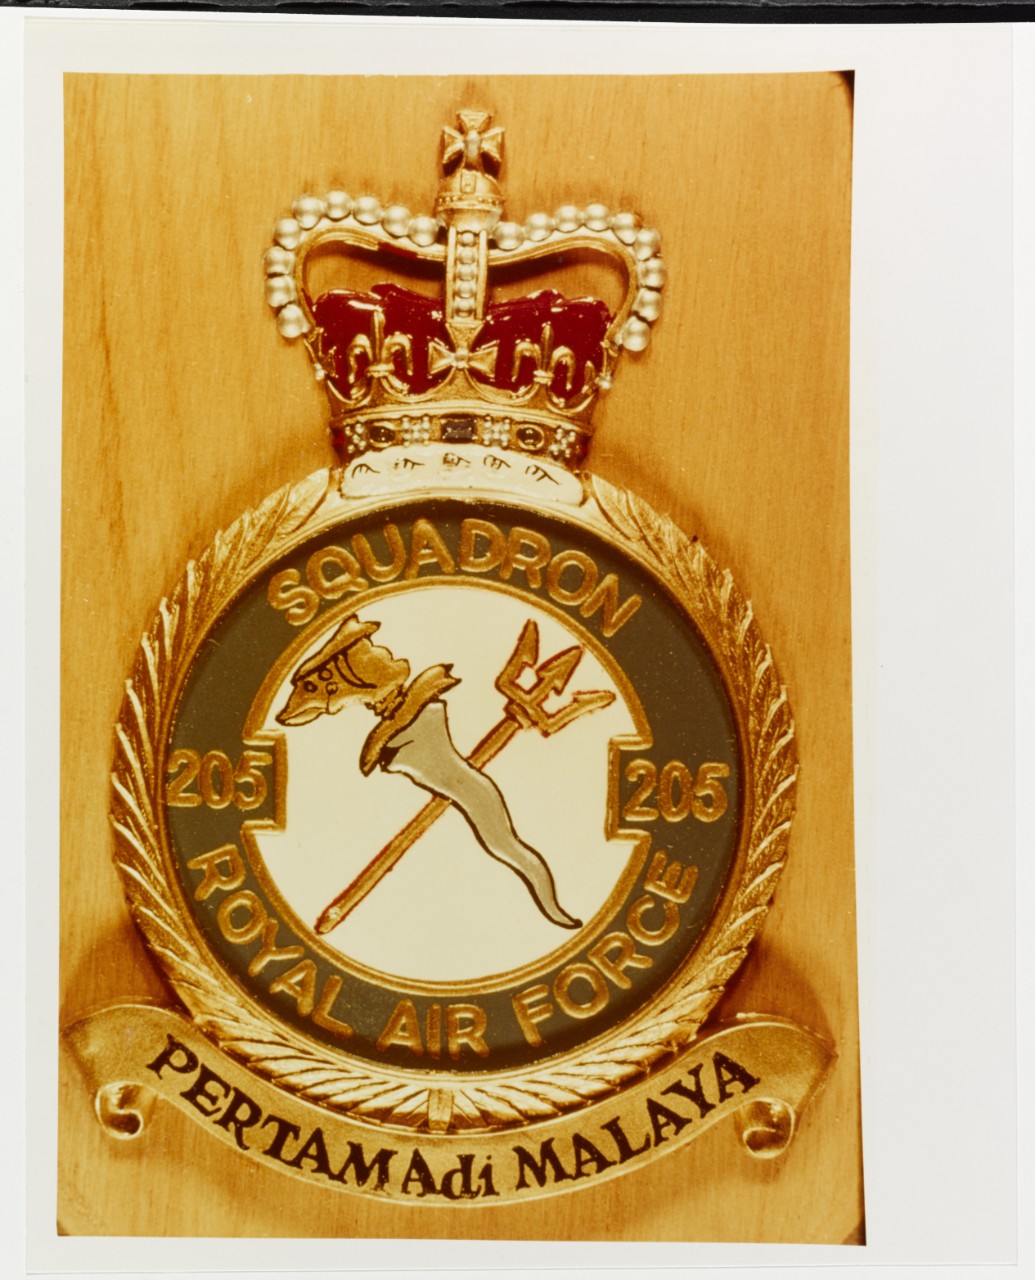 Insignia: British Royal Air Force Squadron 205, Pertamadi, Malaya